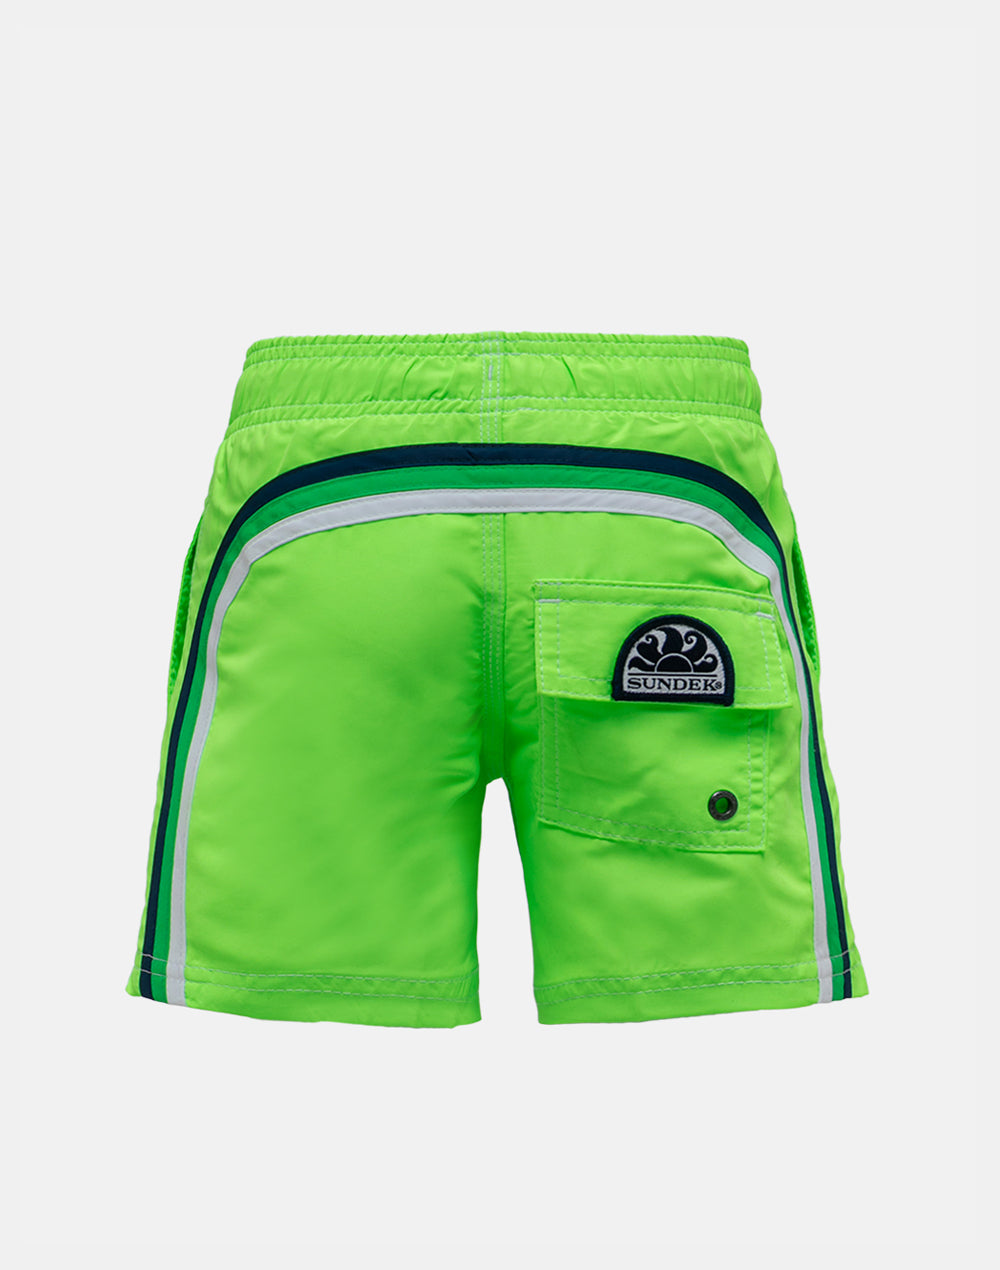 Adoración fácilmente semilla Sundek short swim shorts with an elasticated waistband B504BDTA100-24811 –  SUNDEK